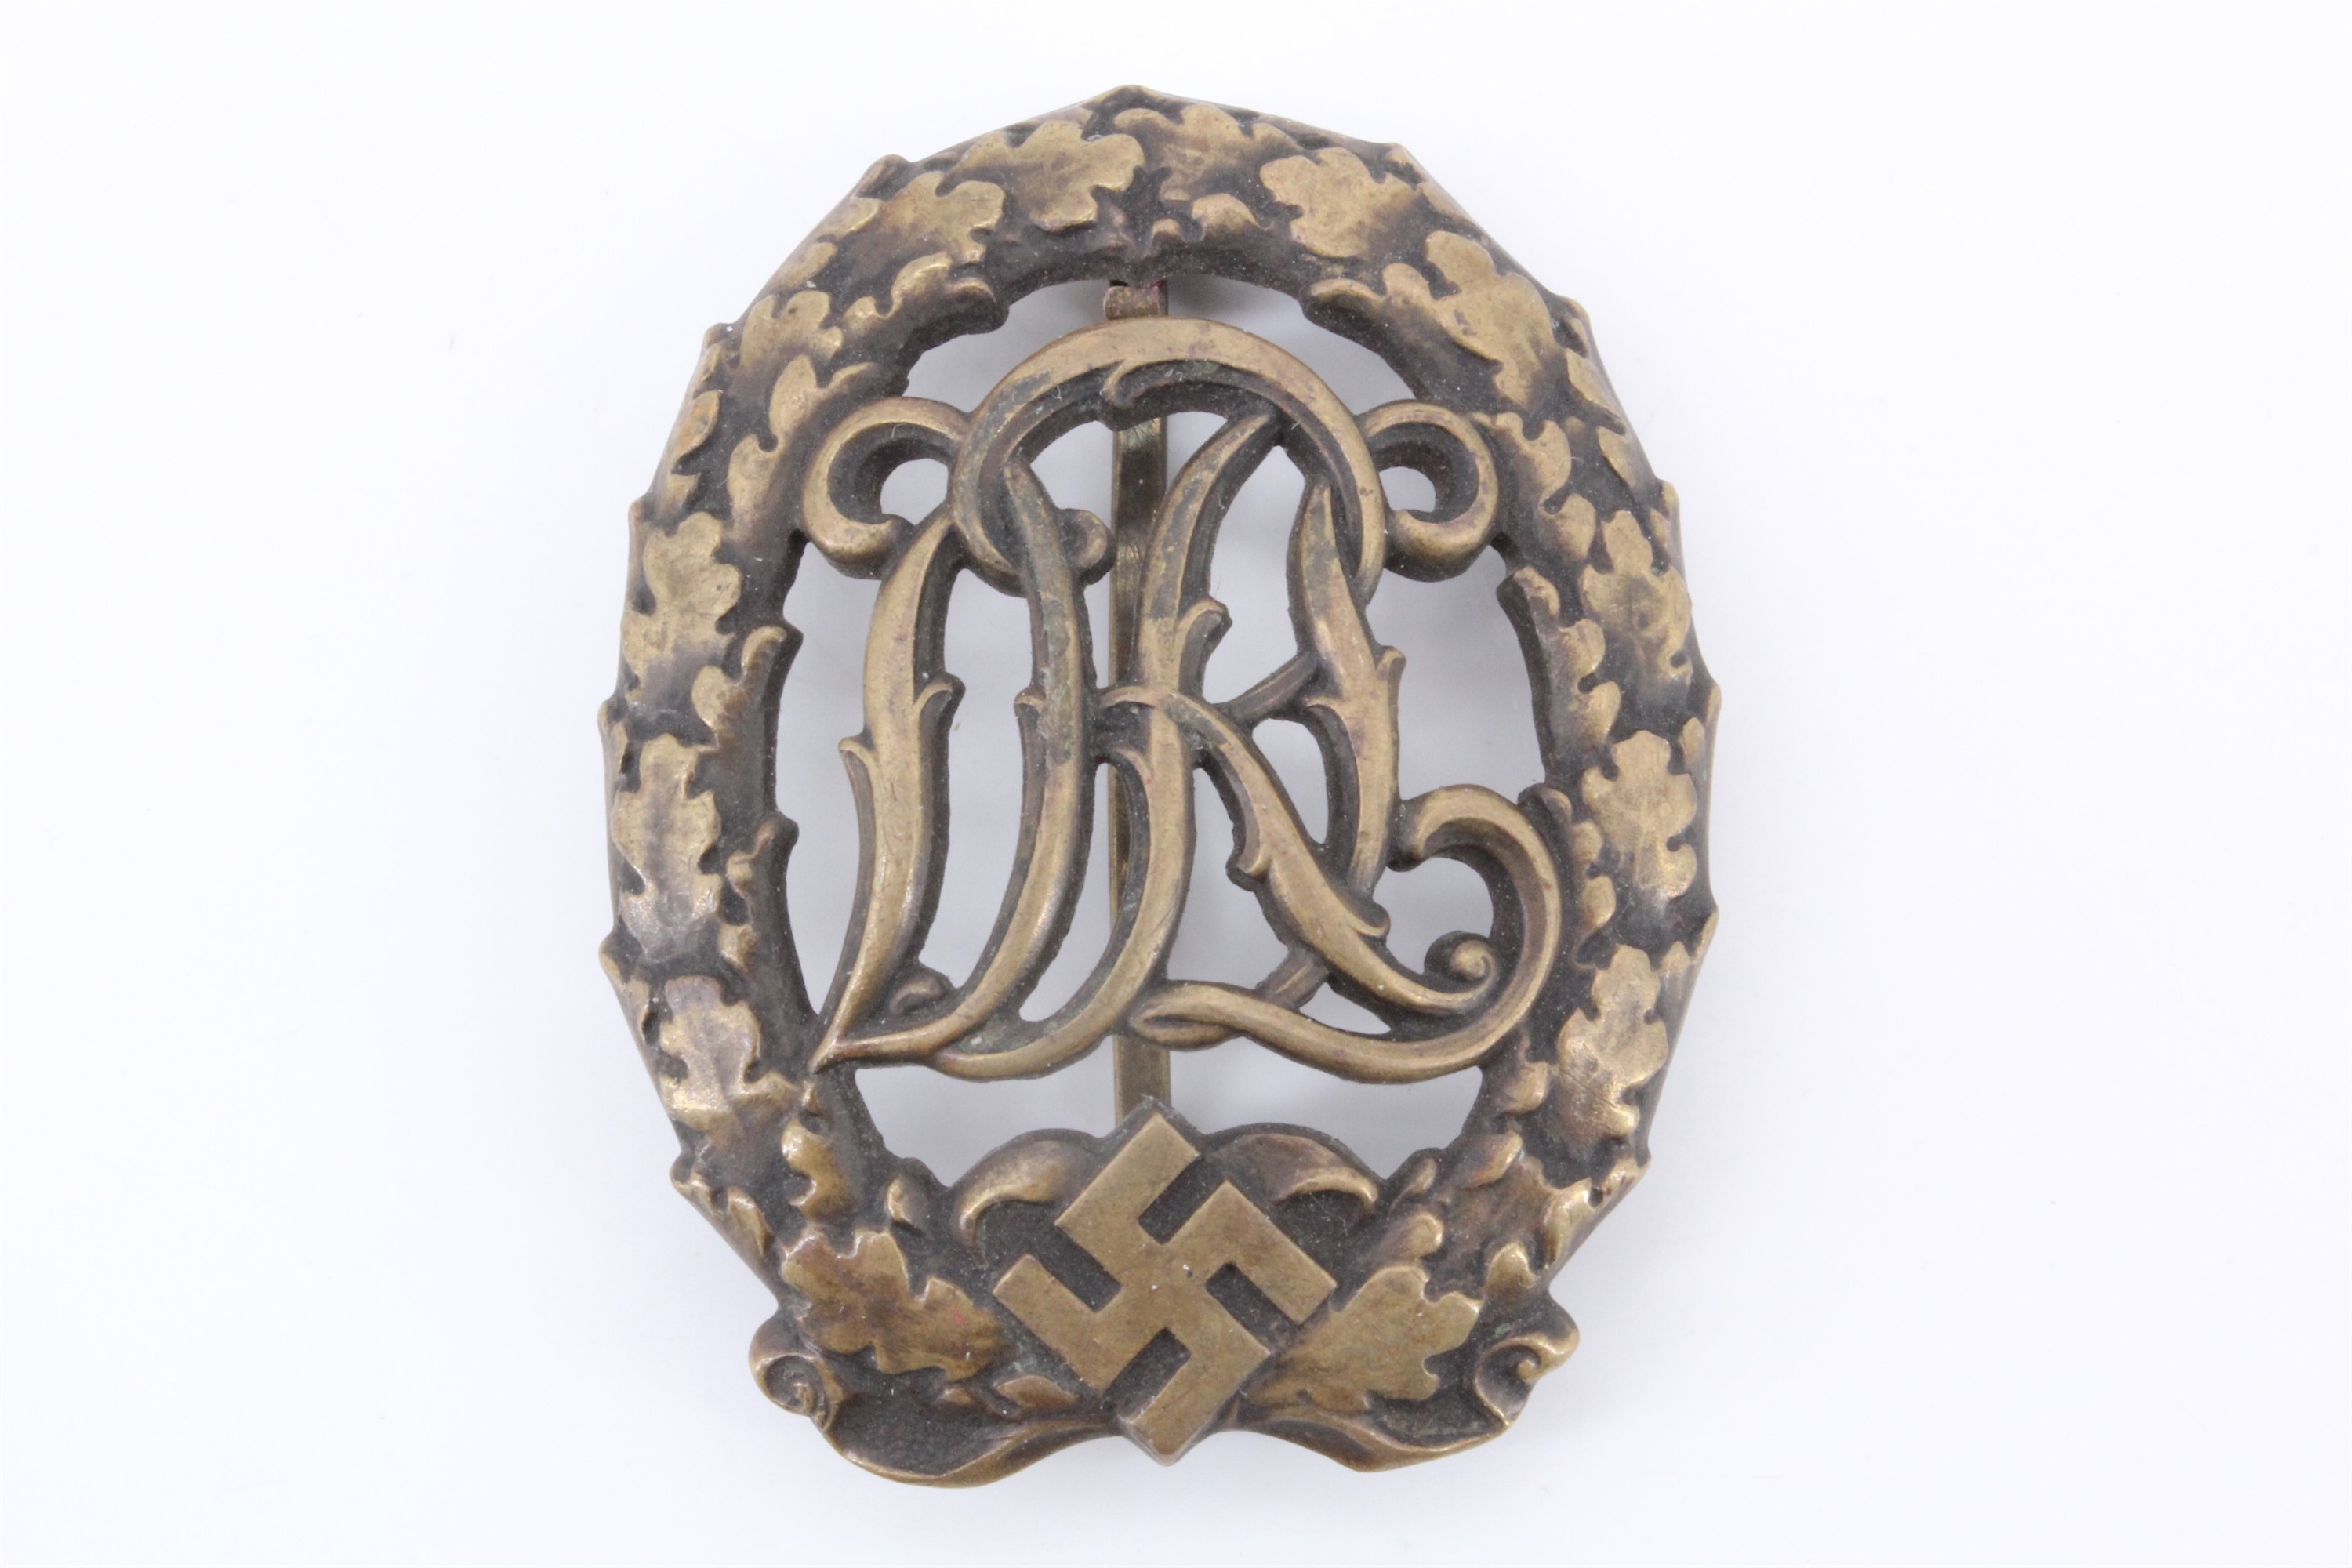 A German Third Reich DRL sports badge